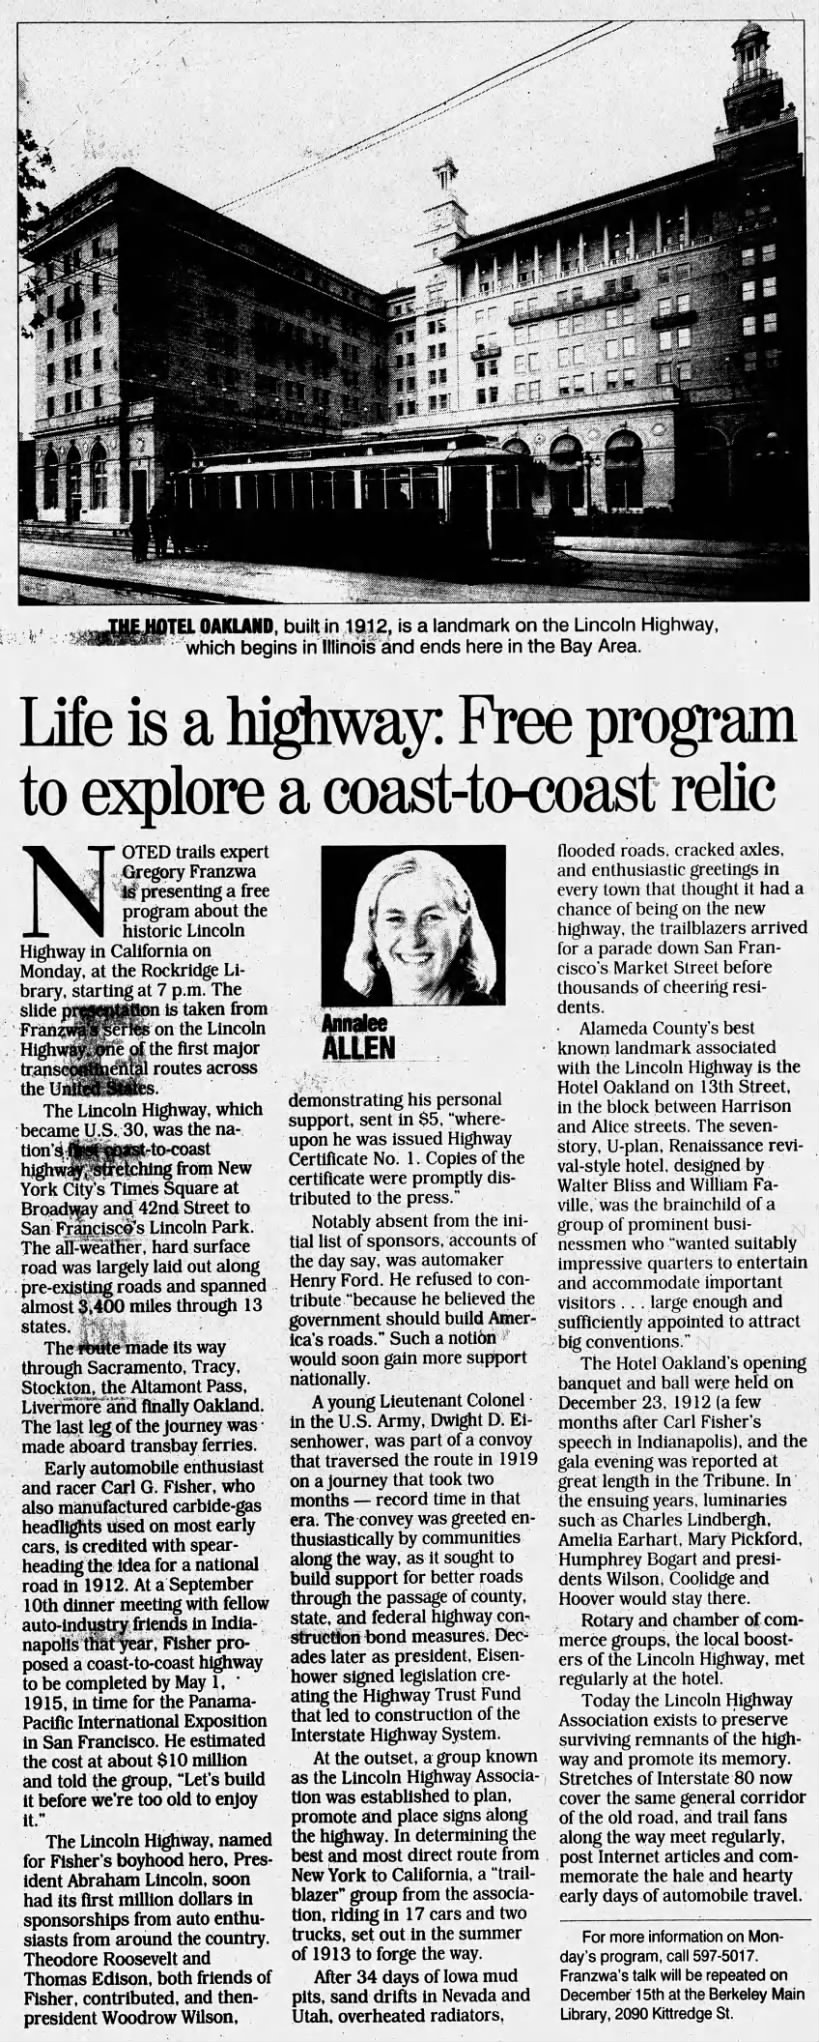 Annalee Allen
Life is a highway: Free program to explore coast-to-coast relic